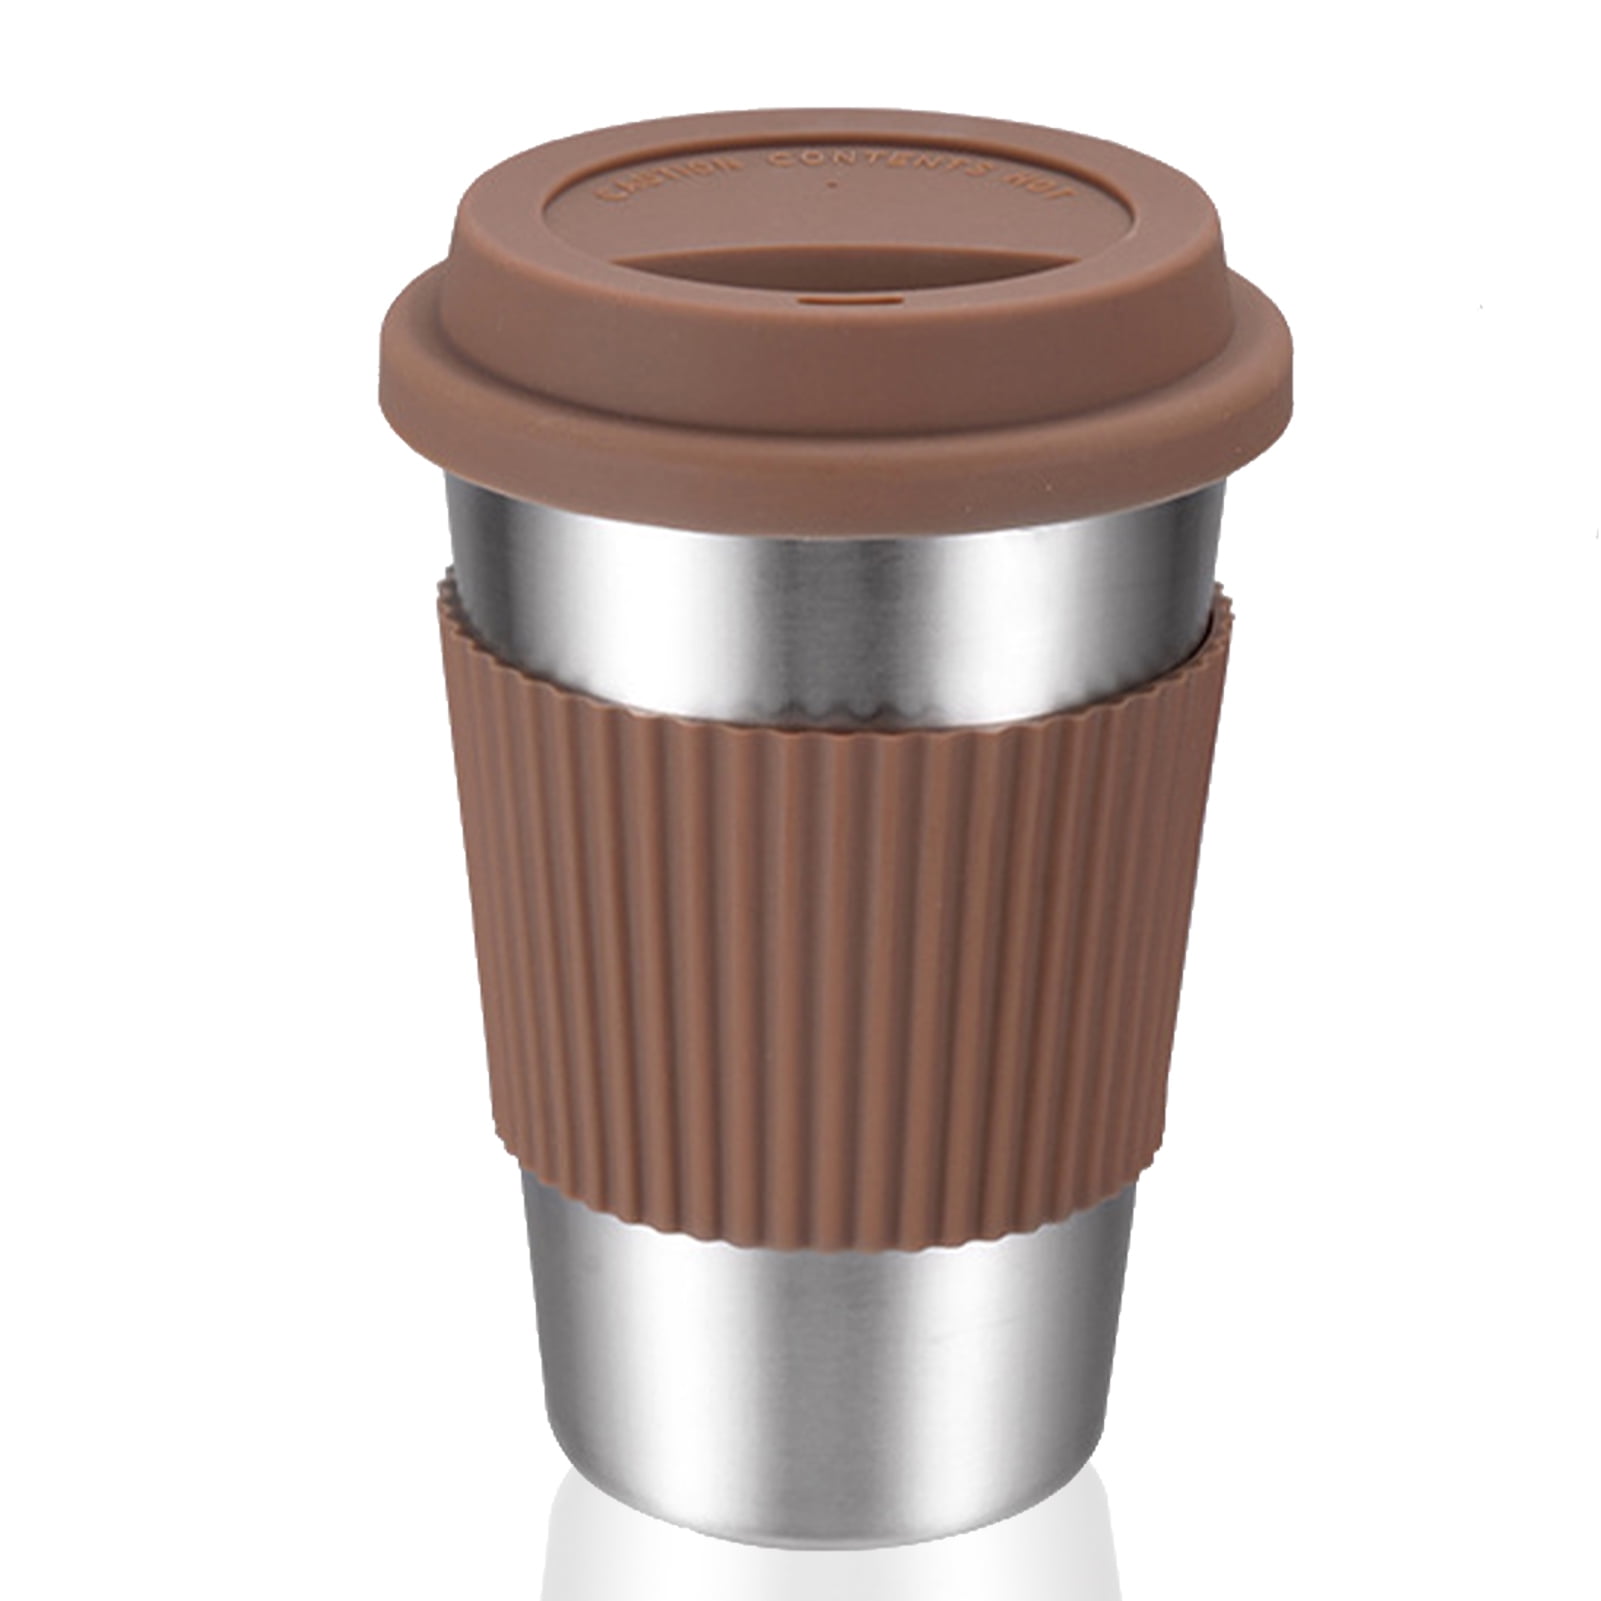 Details about   Stainless Steel Coffee Tea Mug Cups Silcone Sleeve Travel Takeaway Handle Black 